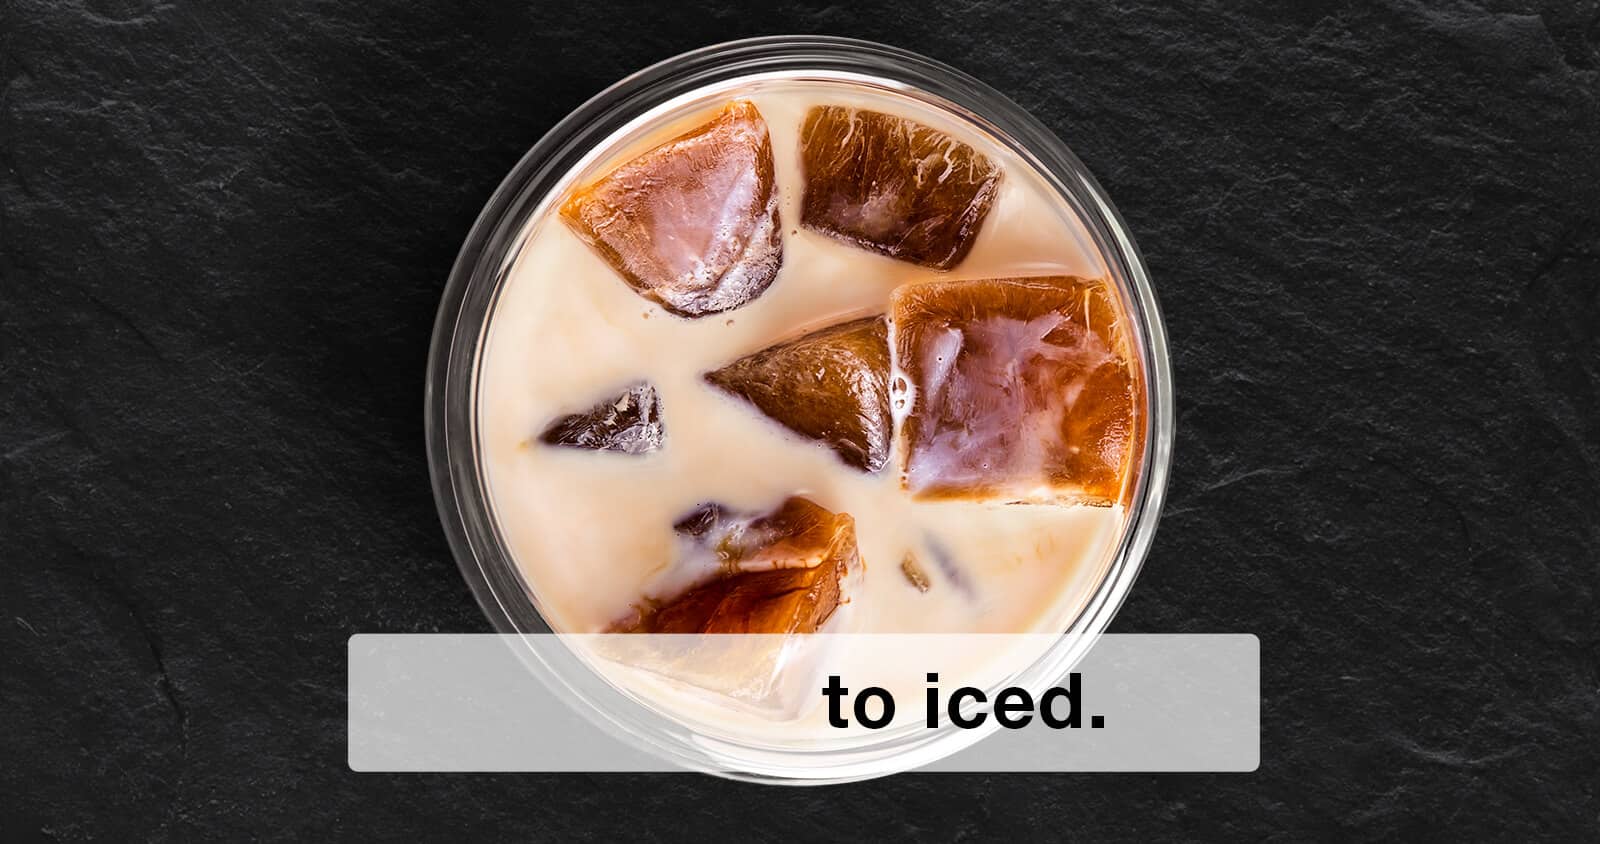 Iced Coffee made by Braun MultiServe Coffee machine